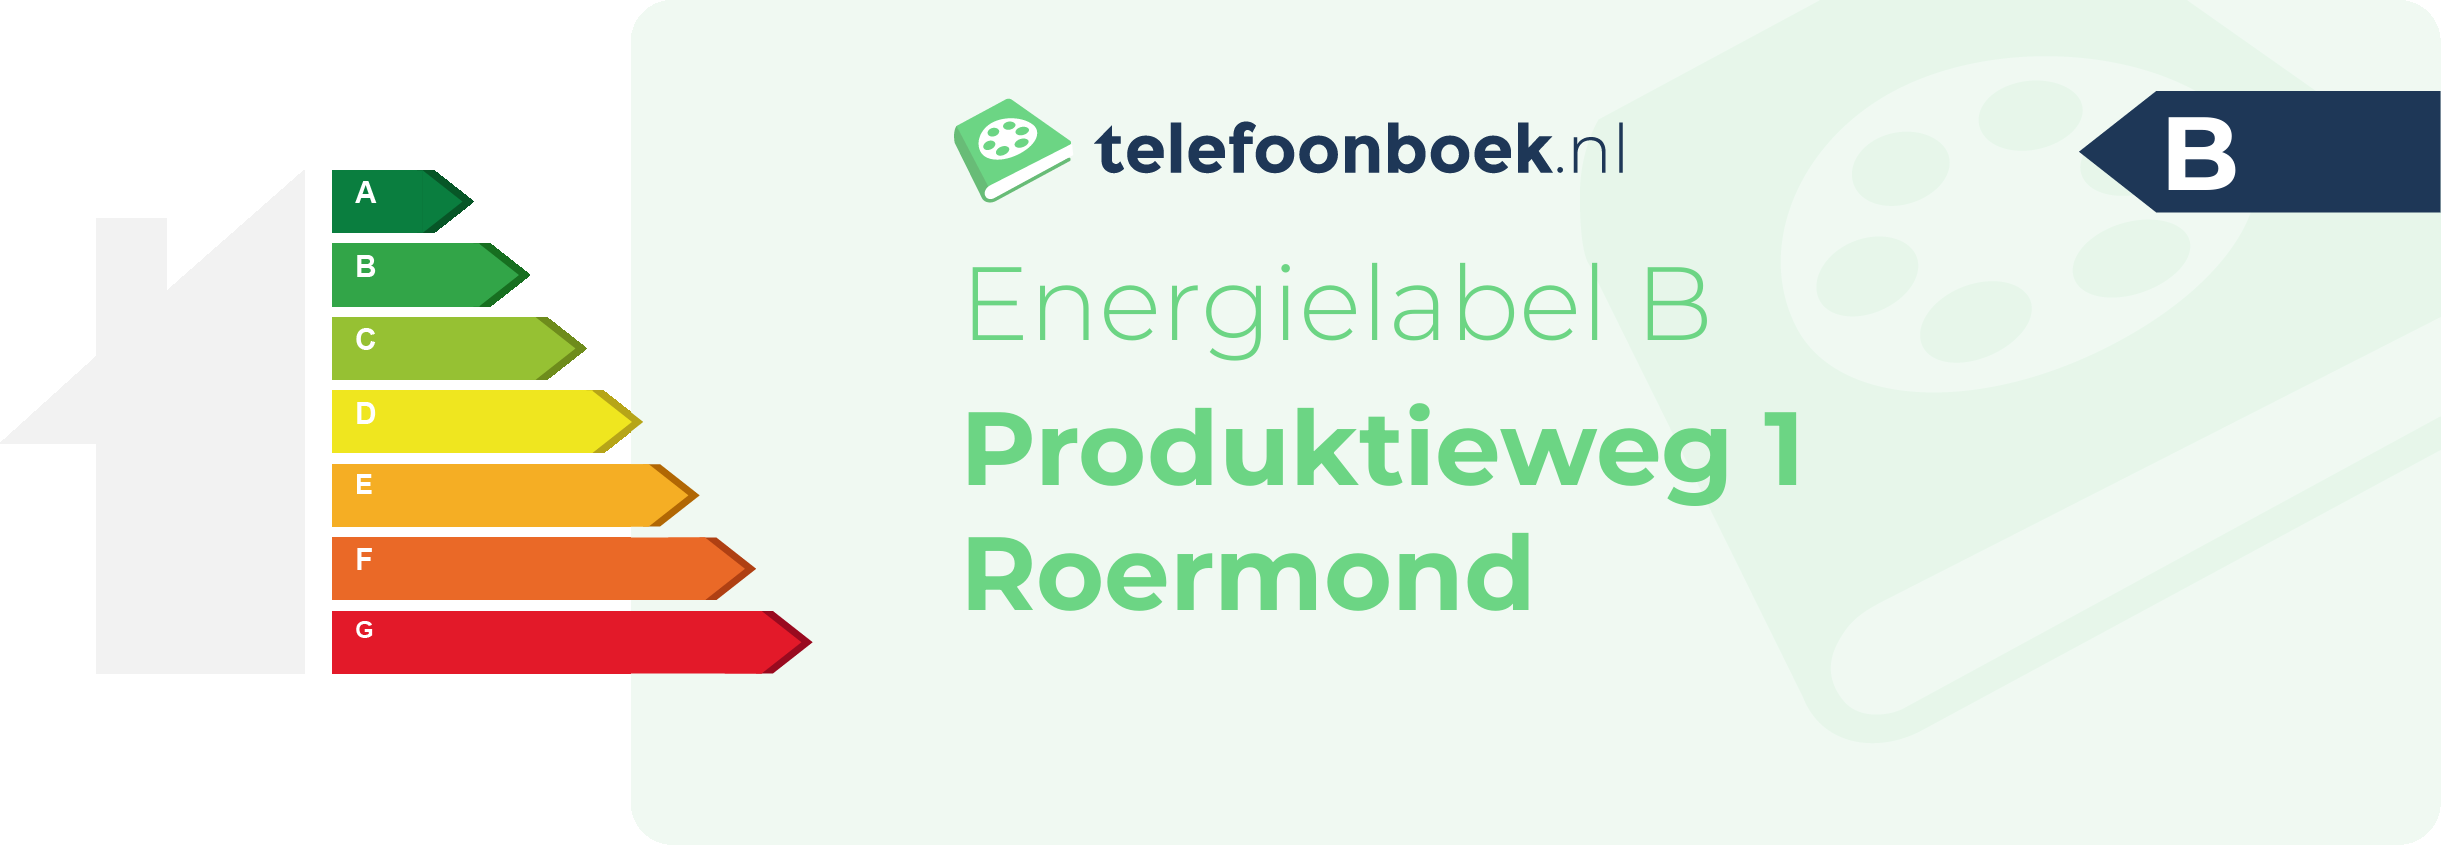 Energielabel Produktieweg 1 Roermond